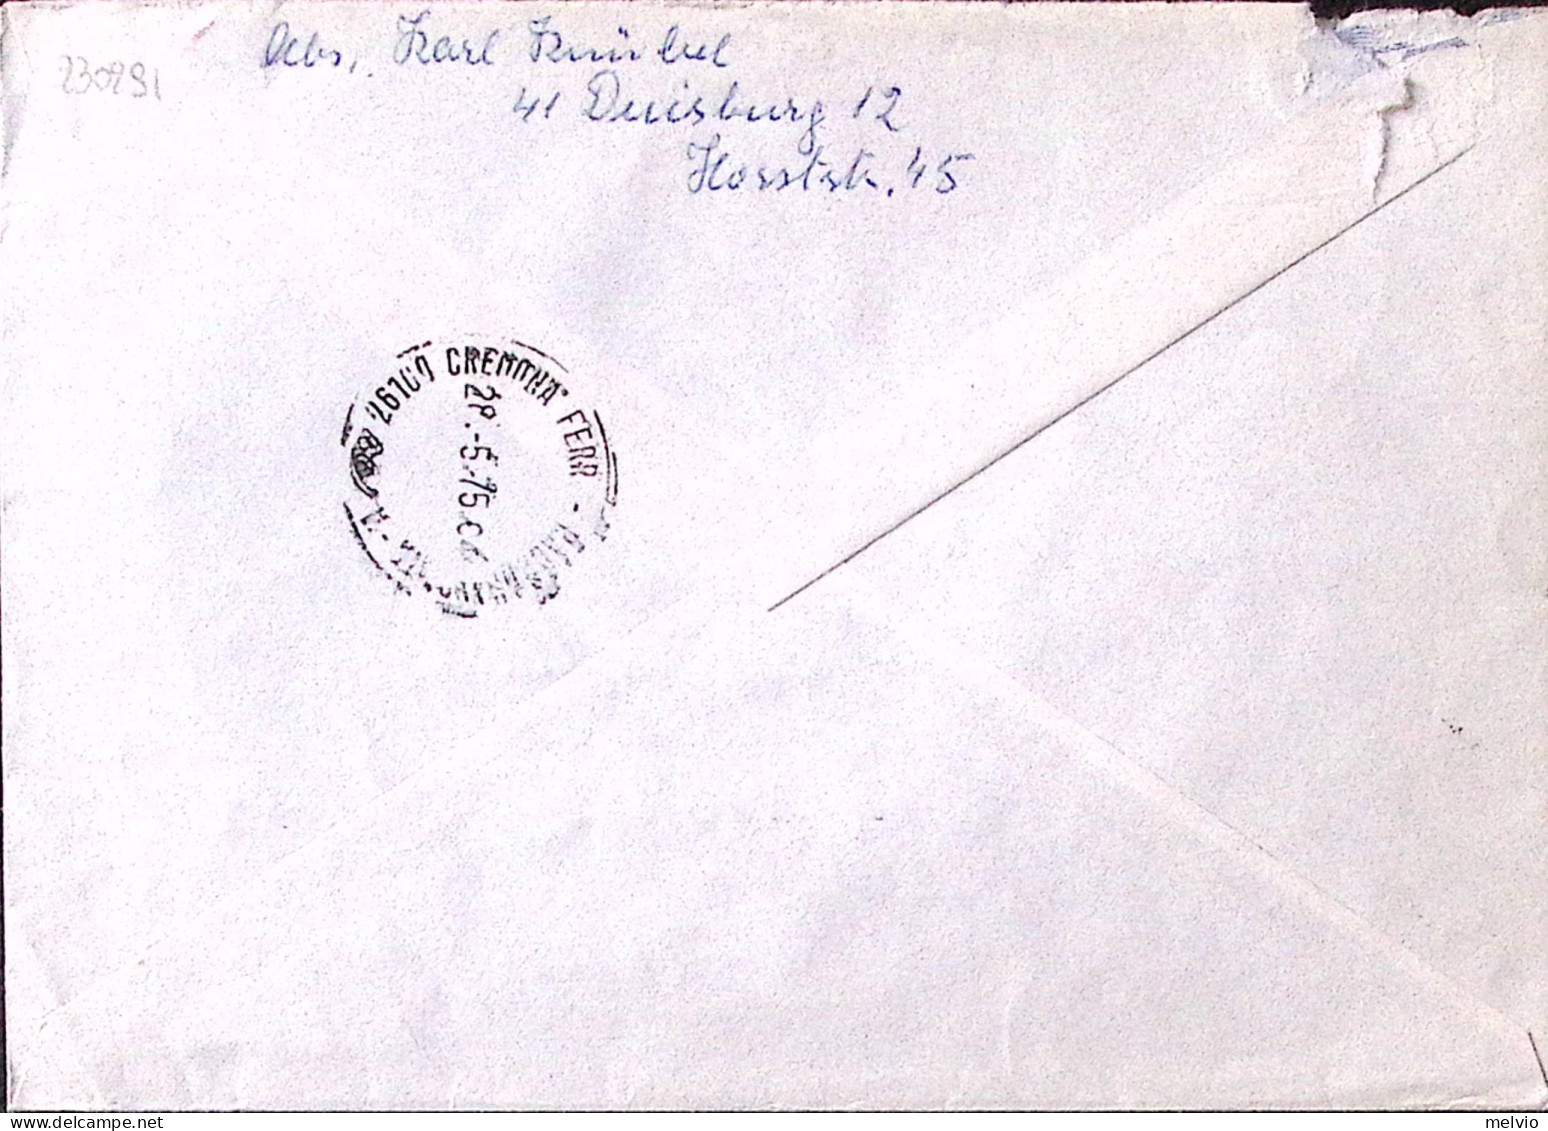 1975-GERMANIA BERLINO OCC. Navi Marina Tedesca Serie Cpl. (447/1) Su Raccomandat - Covers & Documents